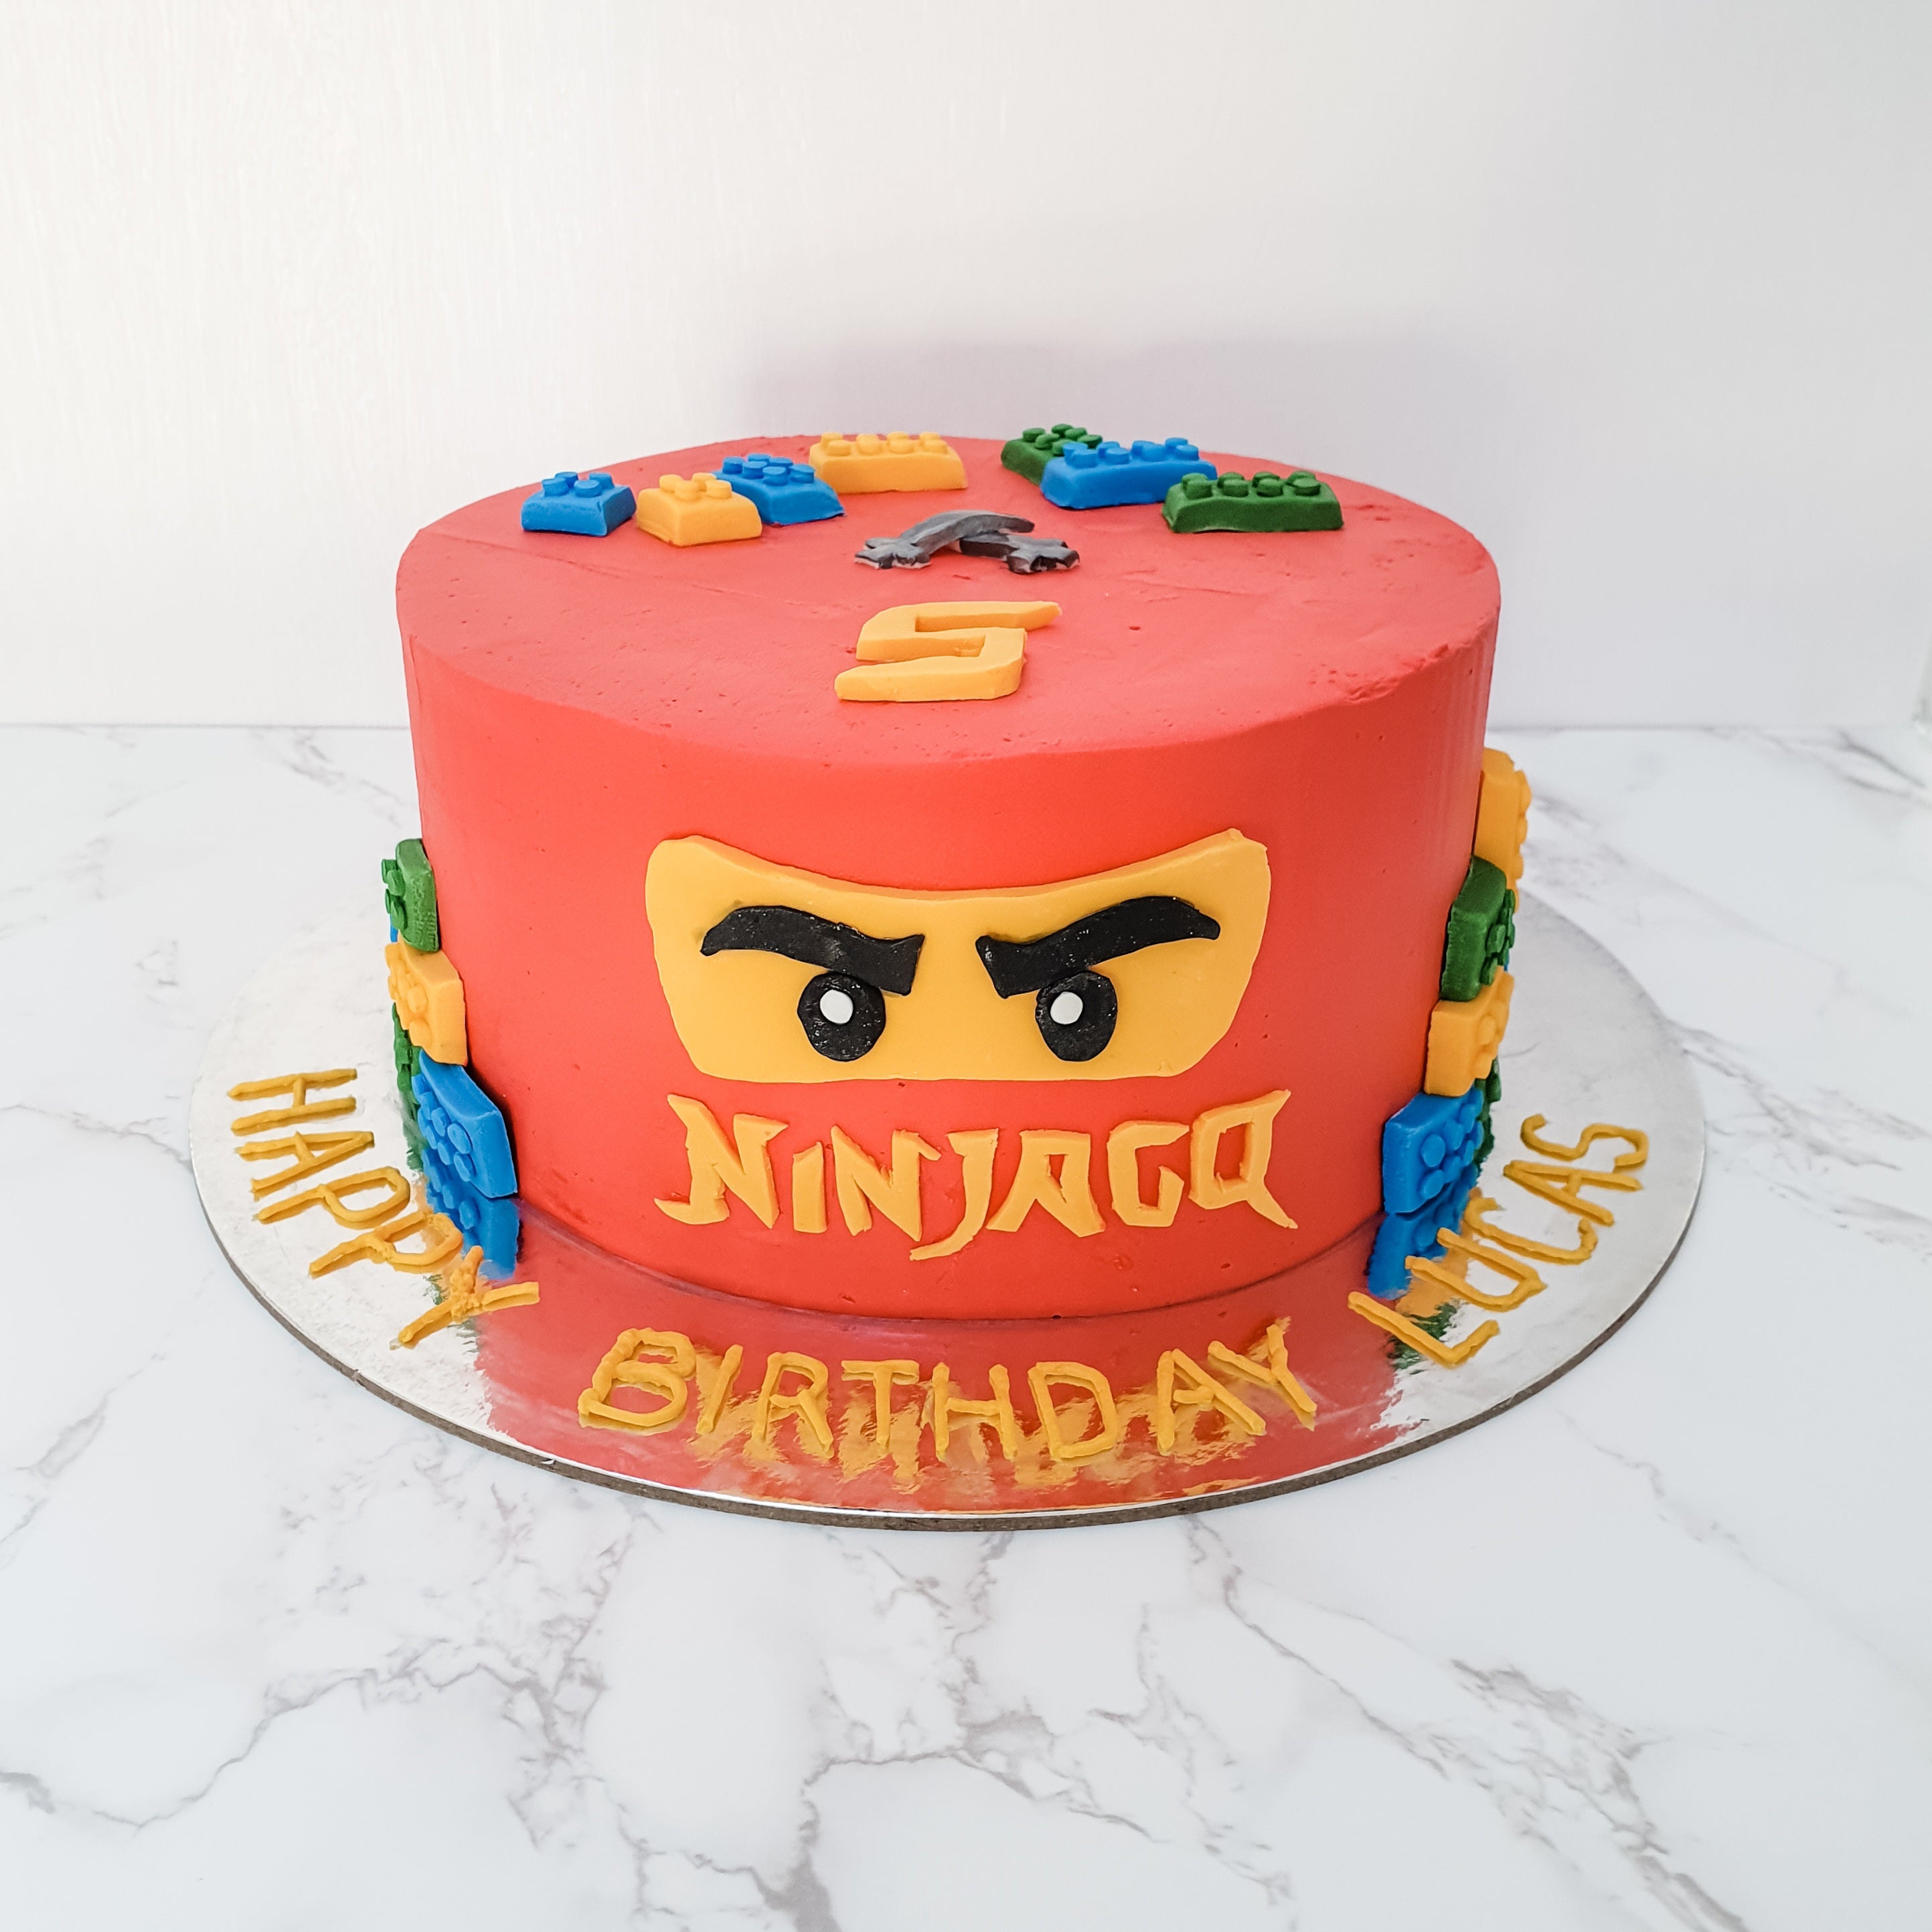 Lego Super Hero Cake - AC46 - Celebration Cakes Melbourne - Amarantos Cakes